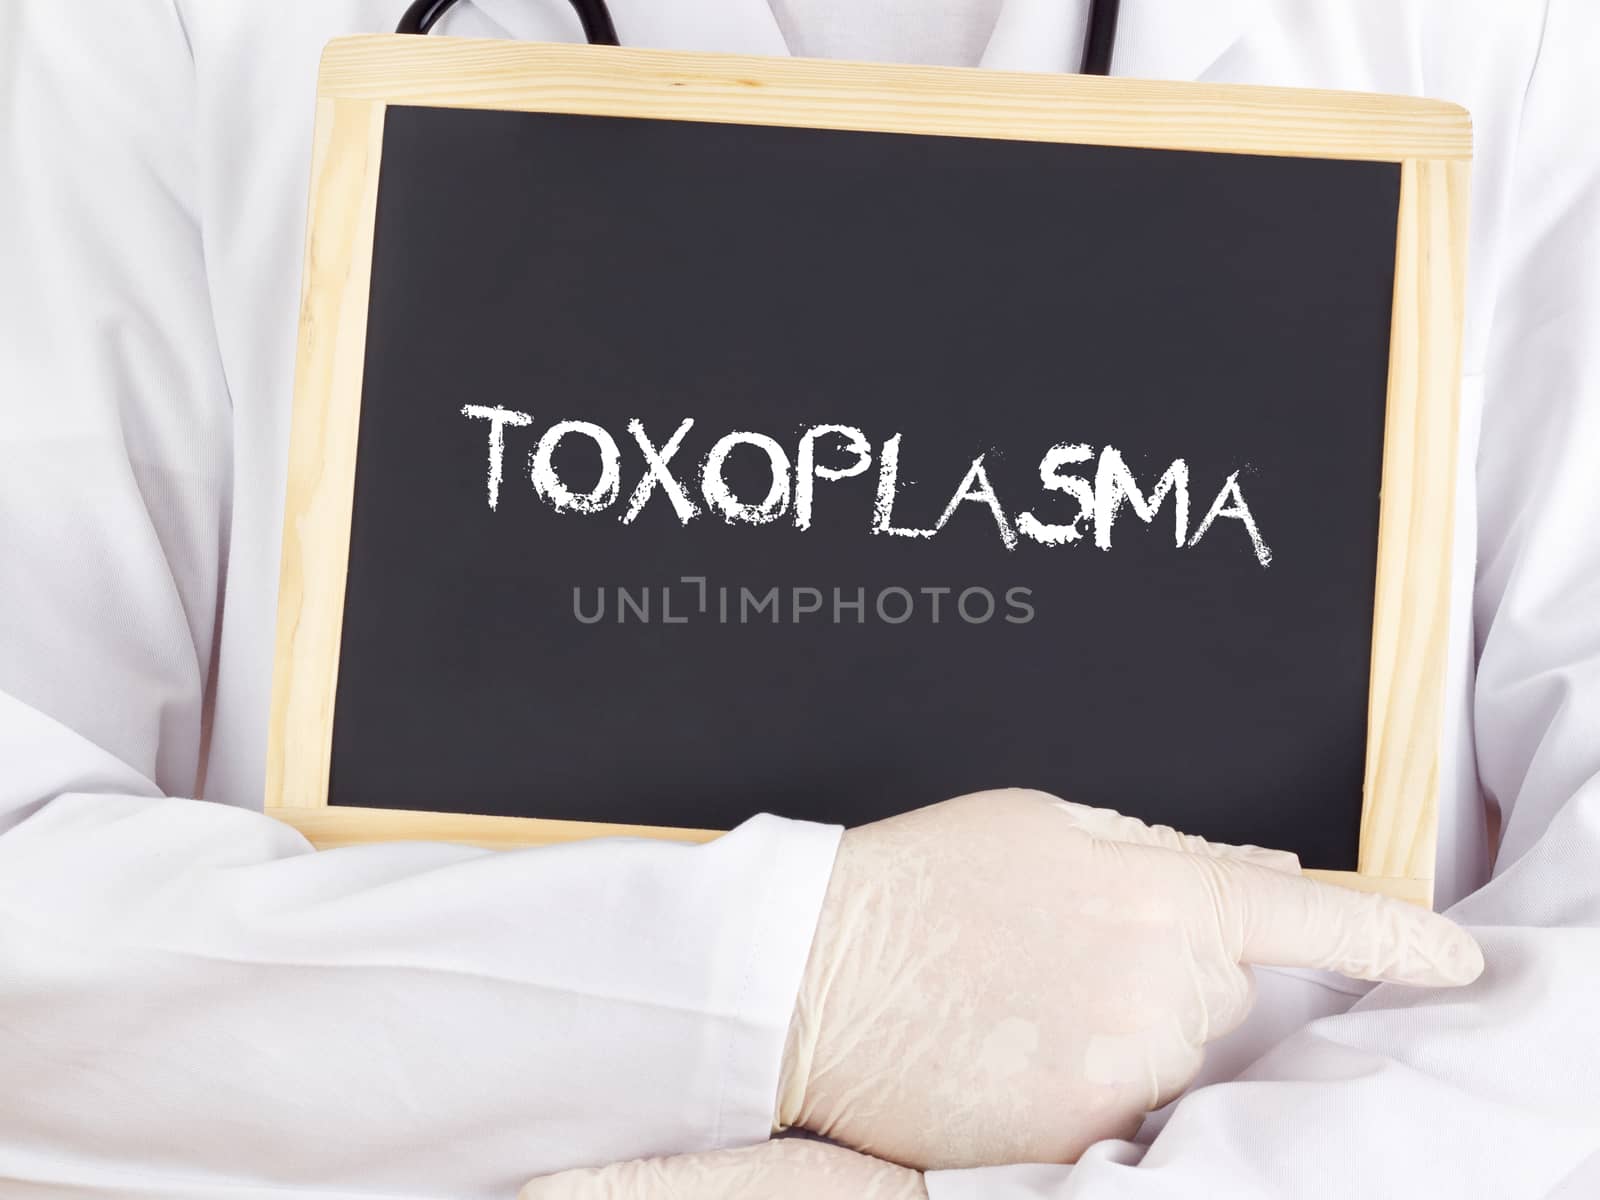 Doctor shows information: Toxoplasma